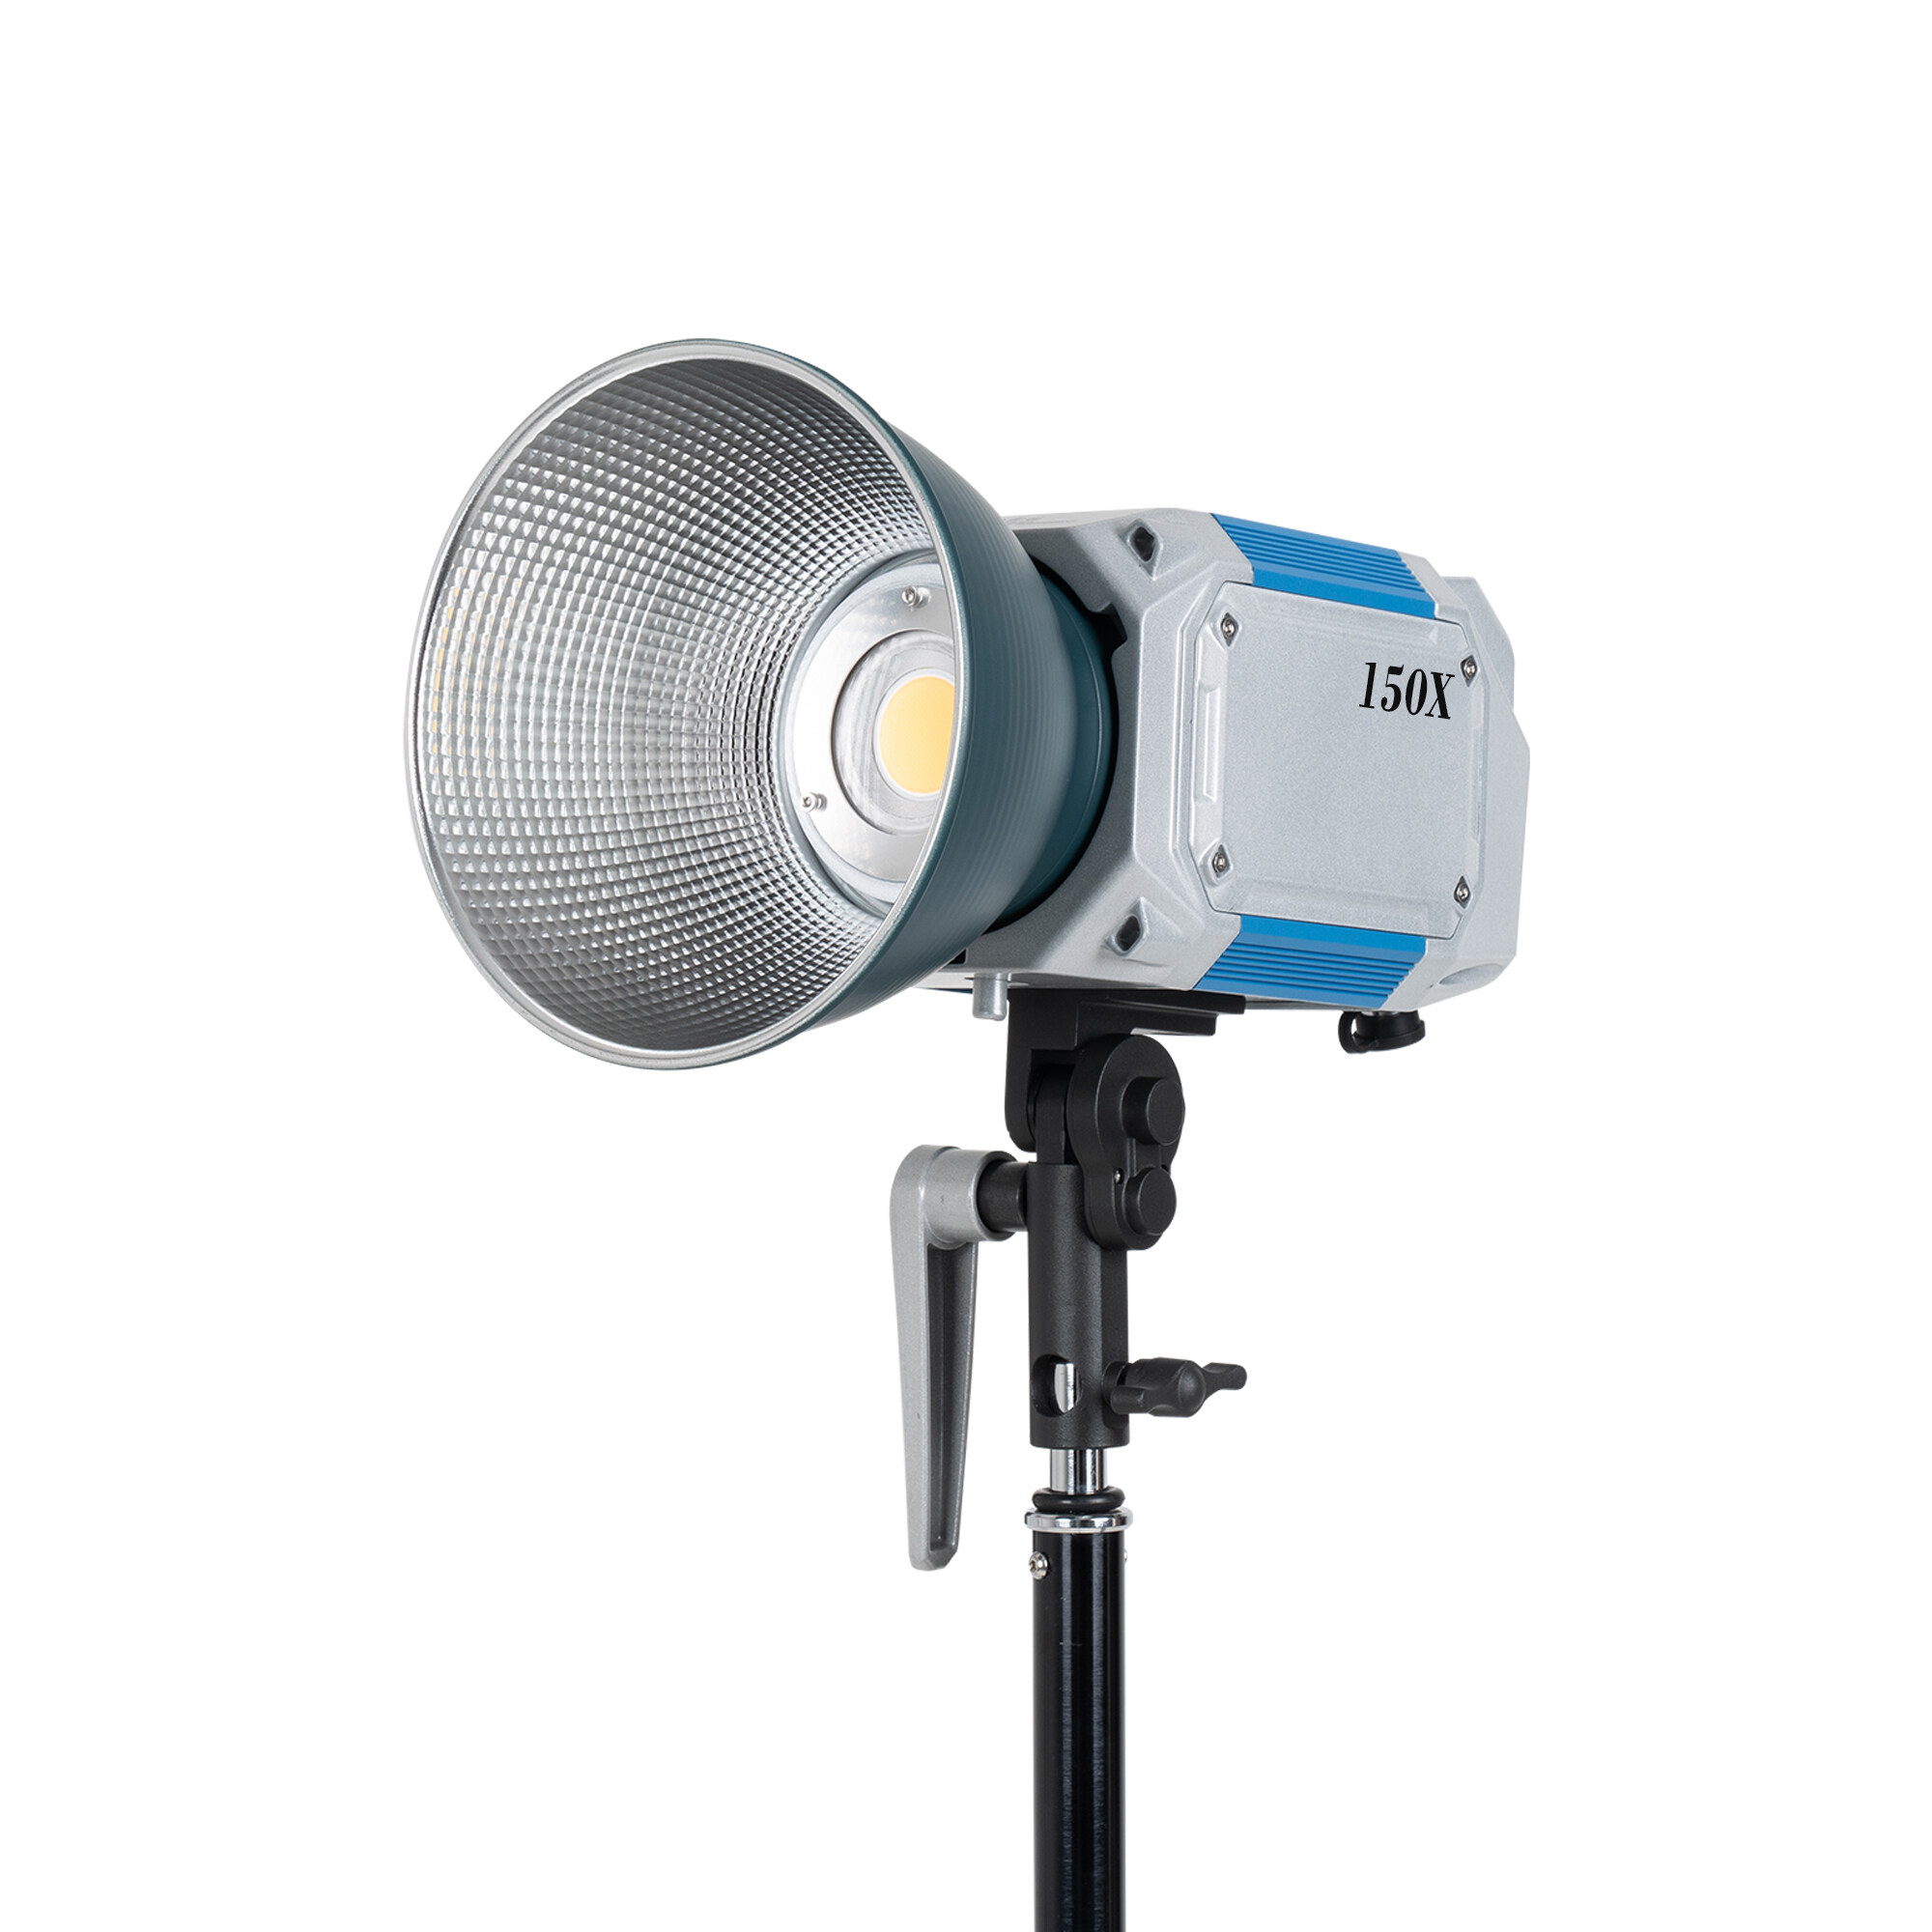 150W LS FOCUS 150X High Power Bi-color LED Spotlight LED monolight for Video Shooting